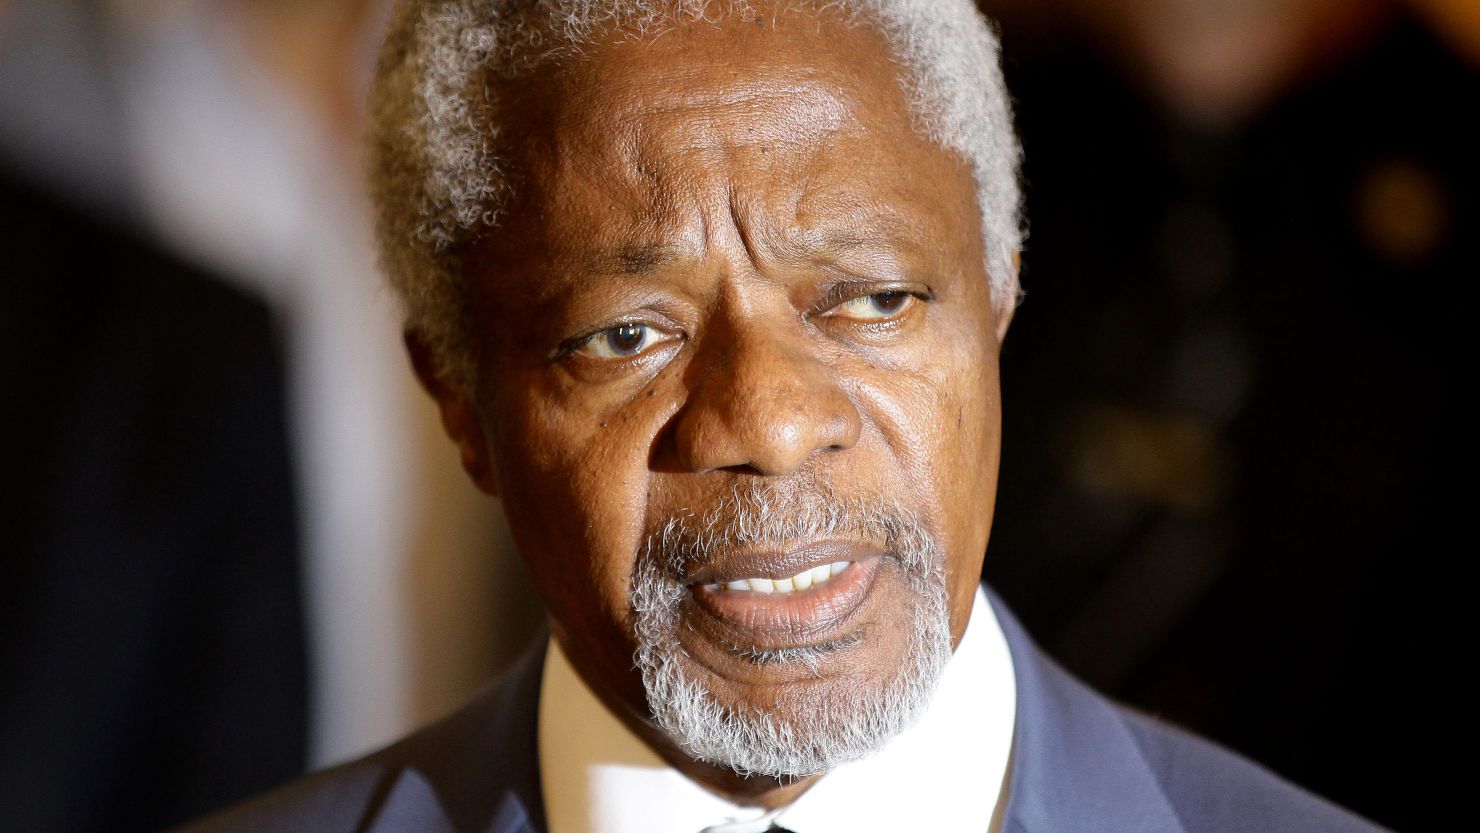 Ghanaian Kofi Annan is the former Secretary-General of the United Nations.